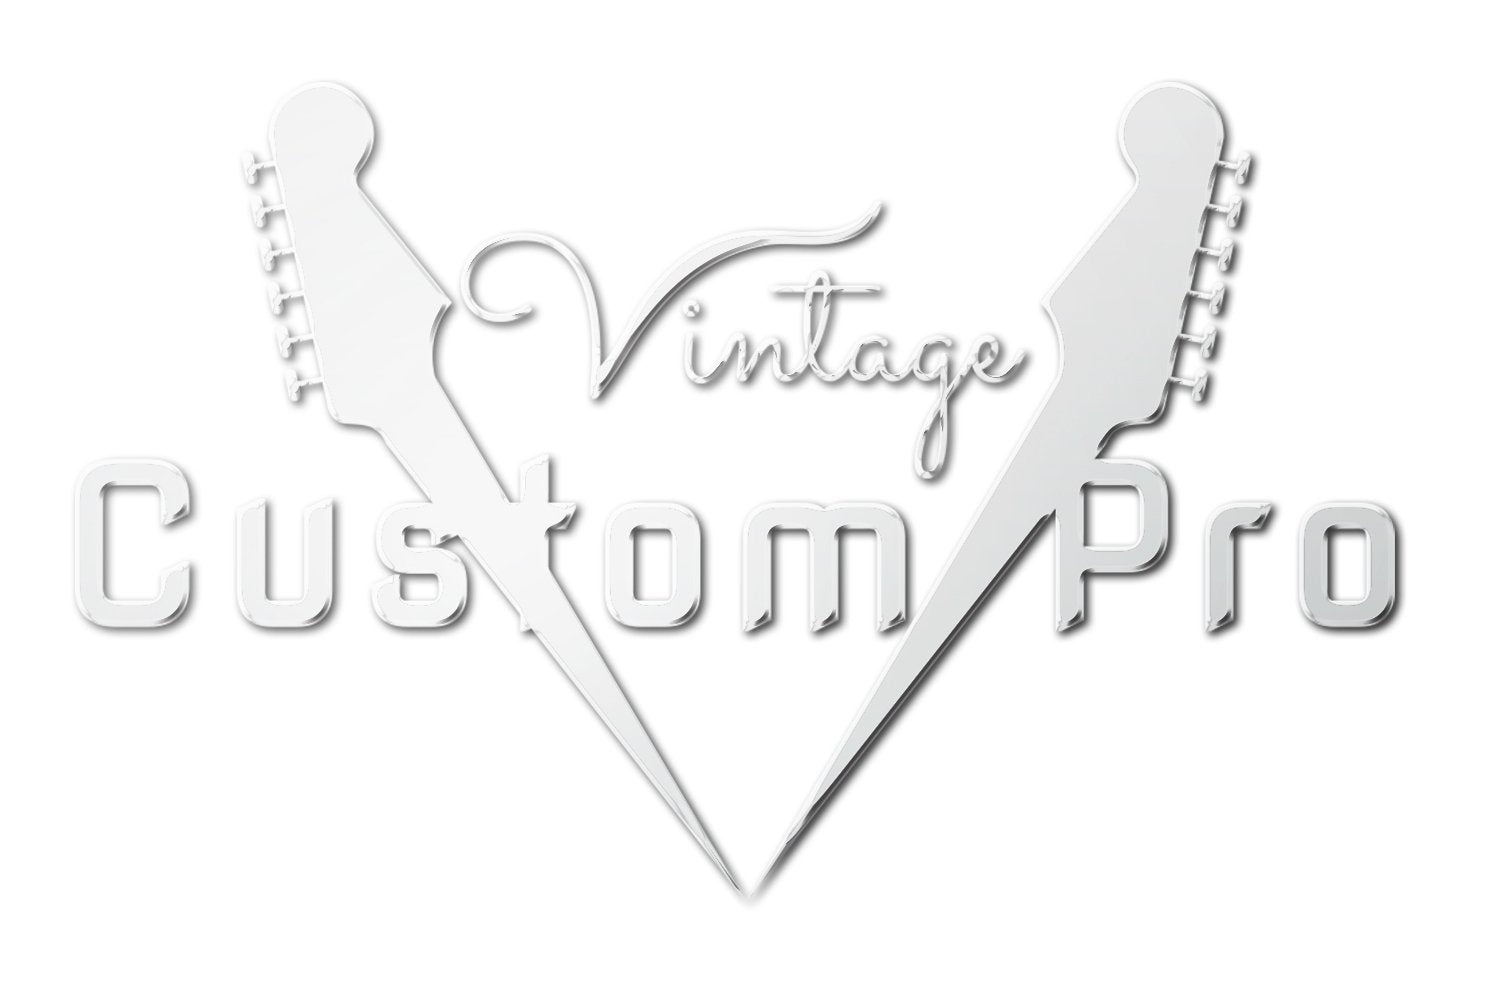 Vintage* V100CS Electric Guitar, Electric Guitar for sale at Richards Guitars.